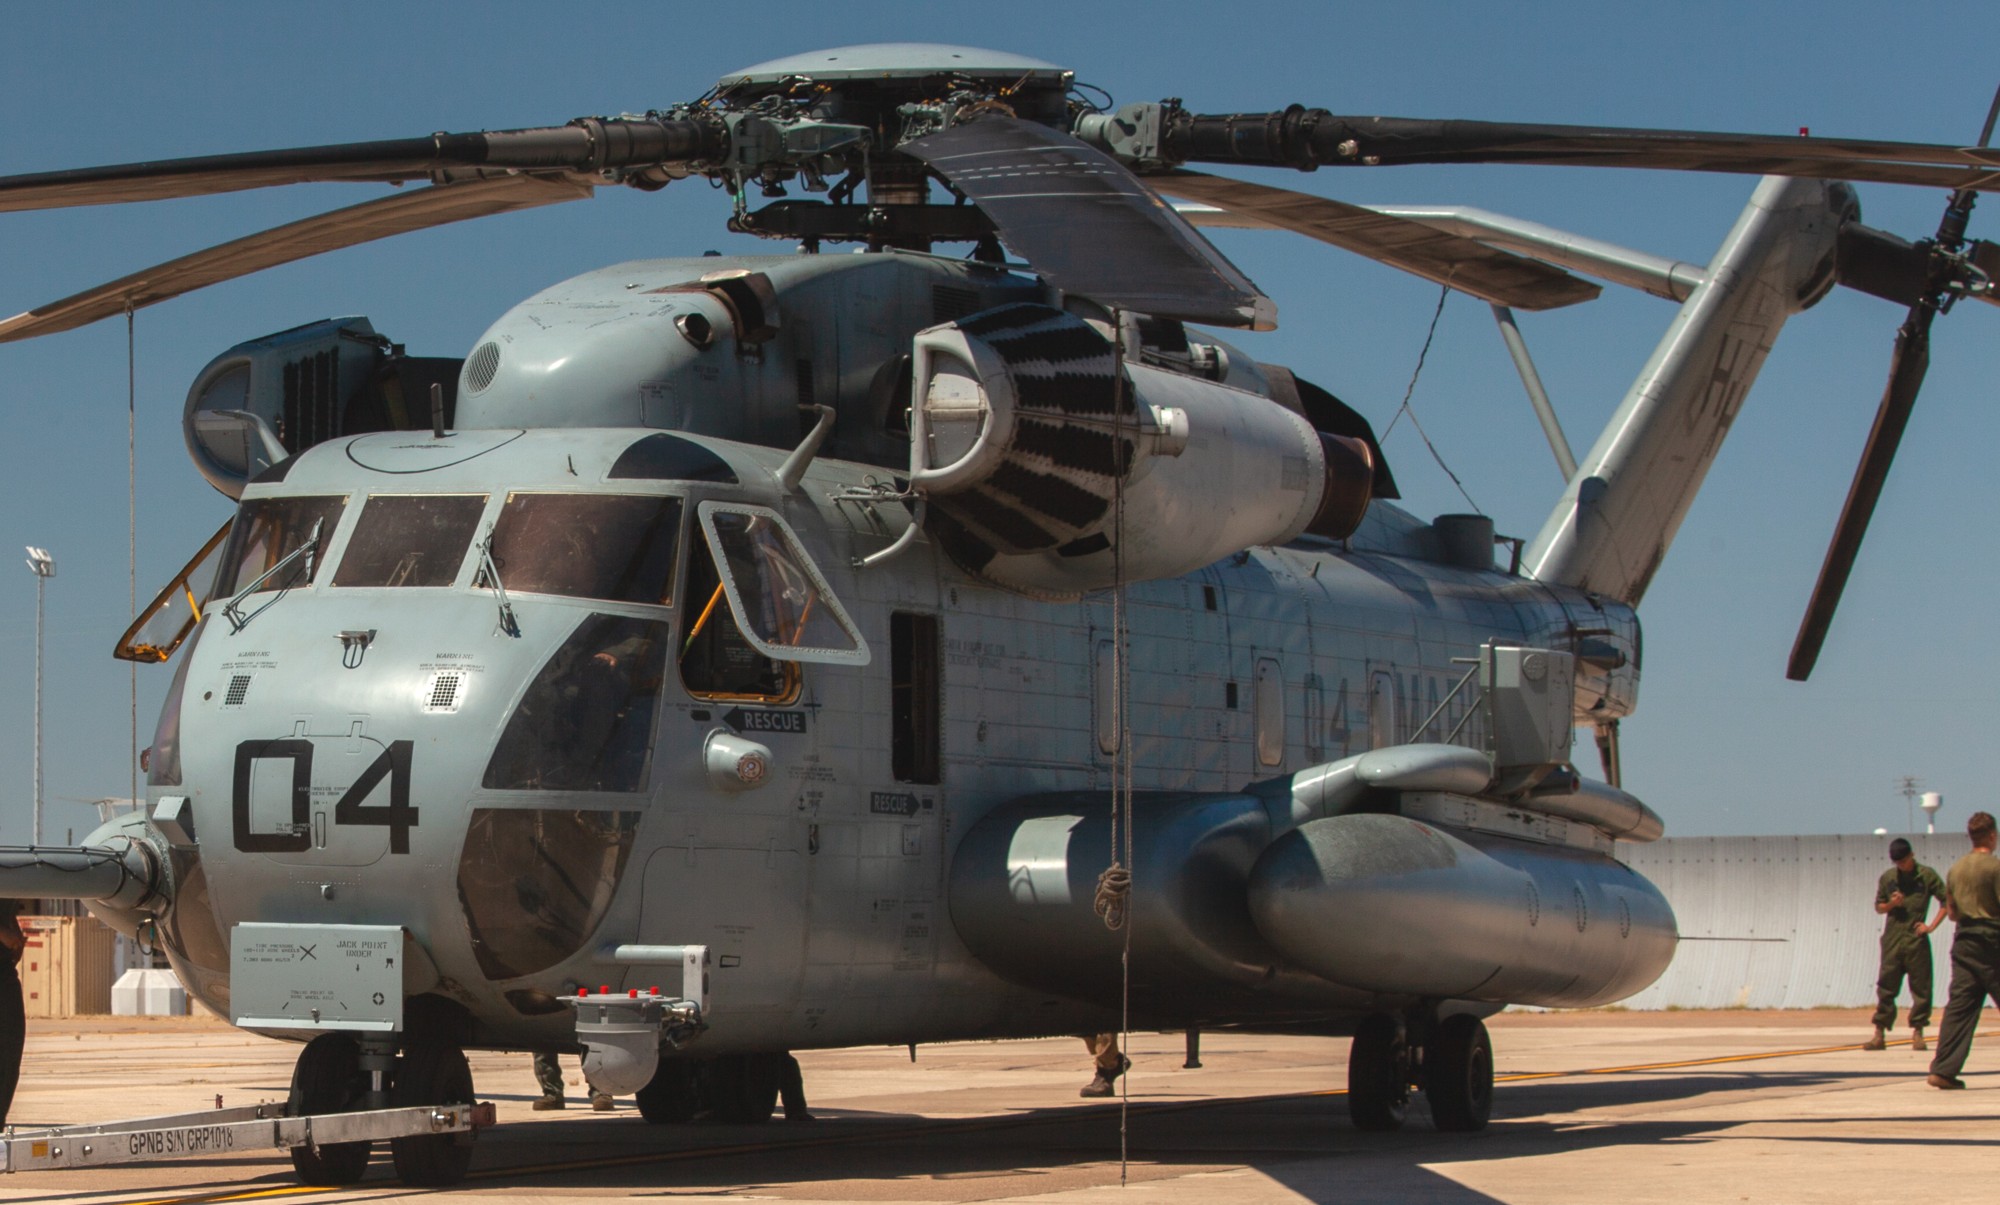 hmh-366 hammerheads ch-53e super stallion marine heavy helicopter squadron nas jrb fort worth texas 167